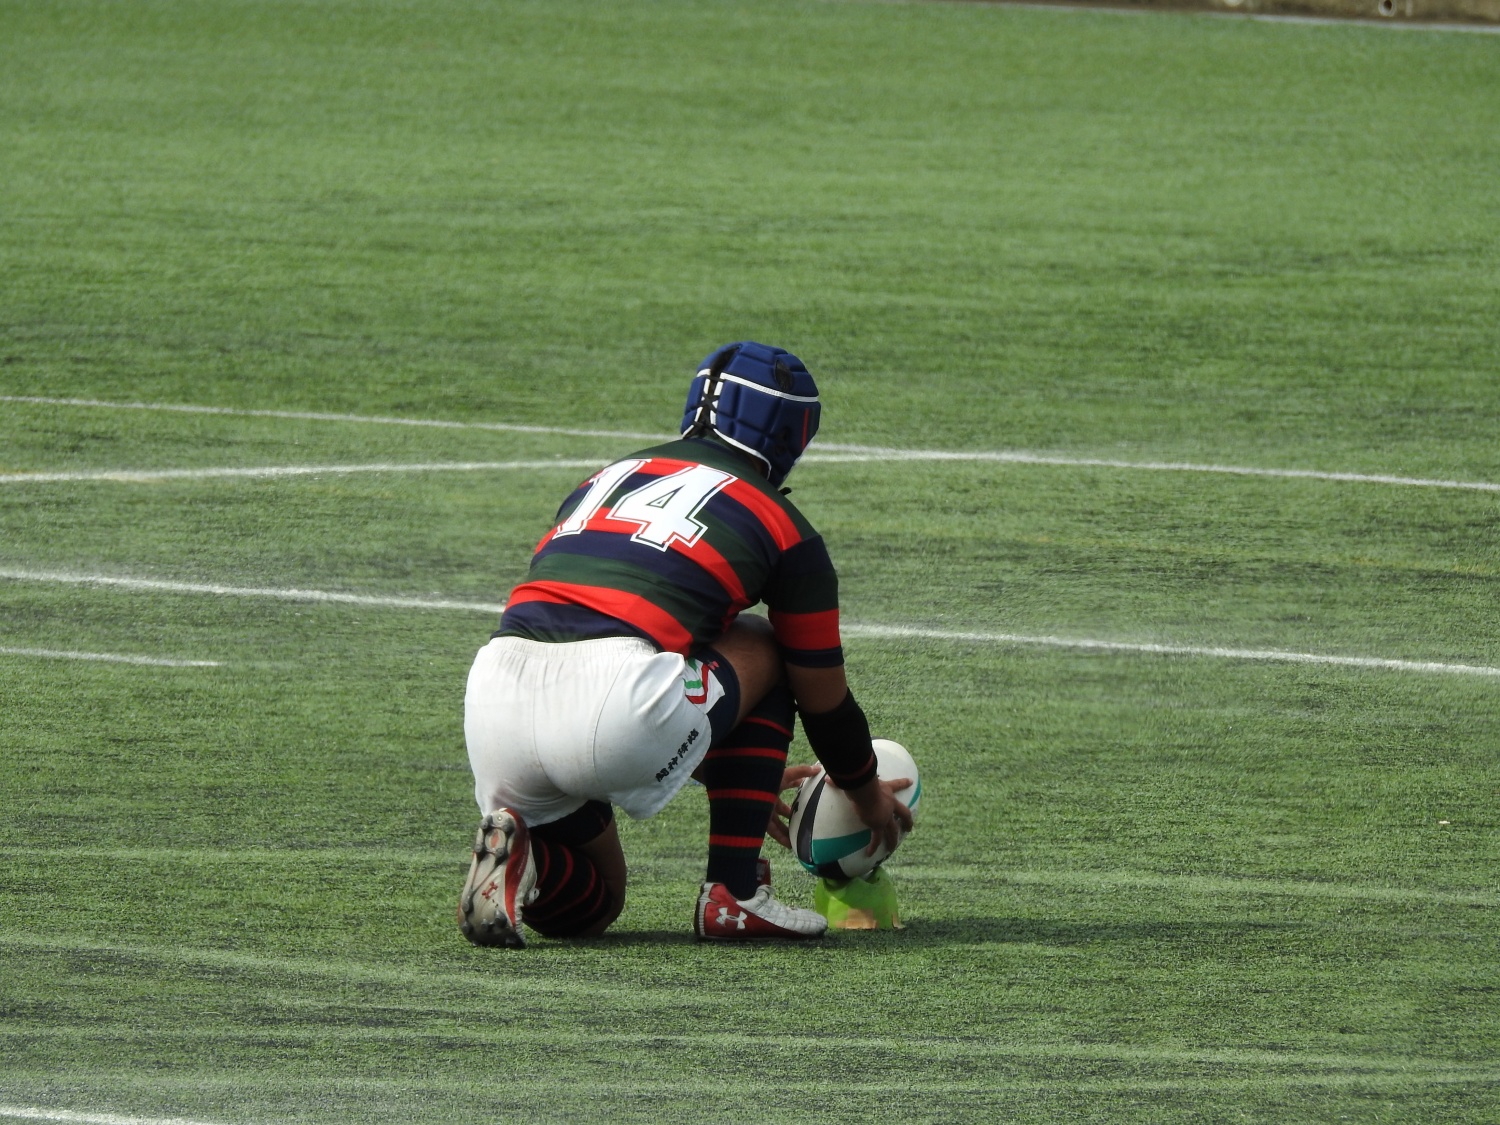 http://kokura-rugby.sakura.ne.jp/DSCN8192_xlarge.JPG